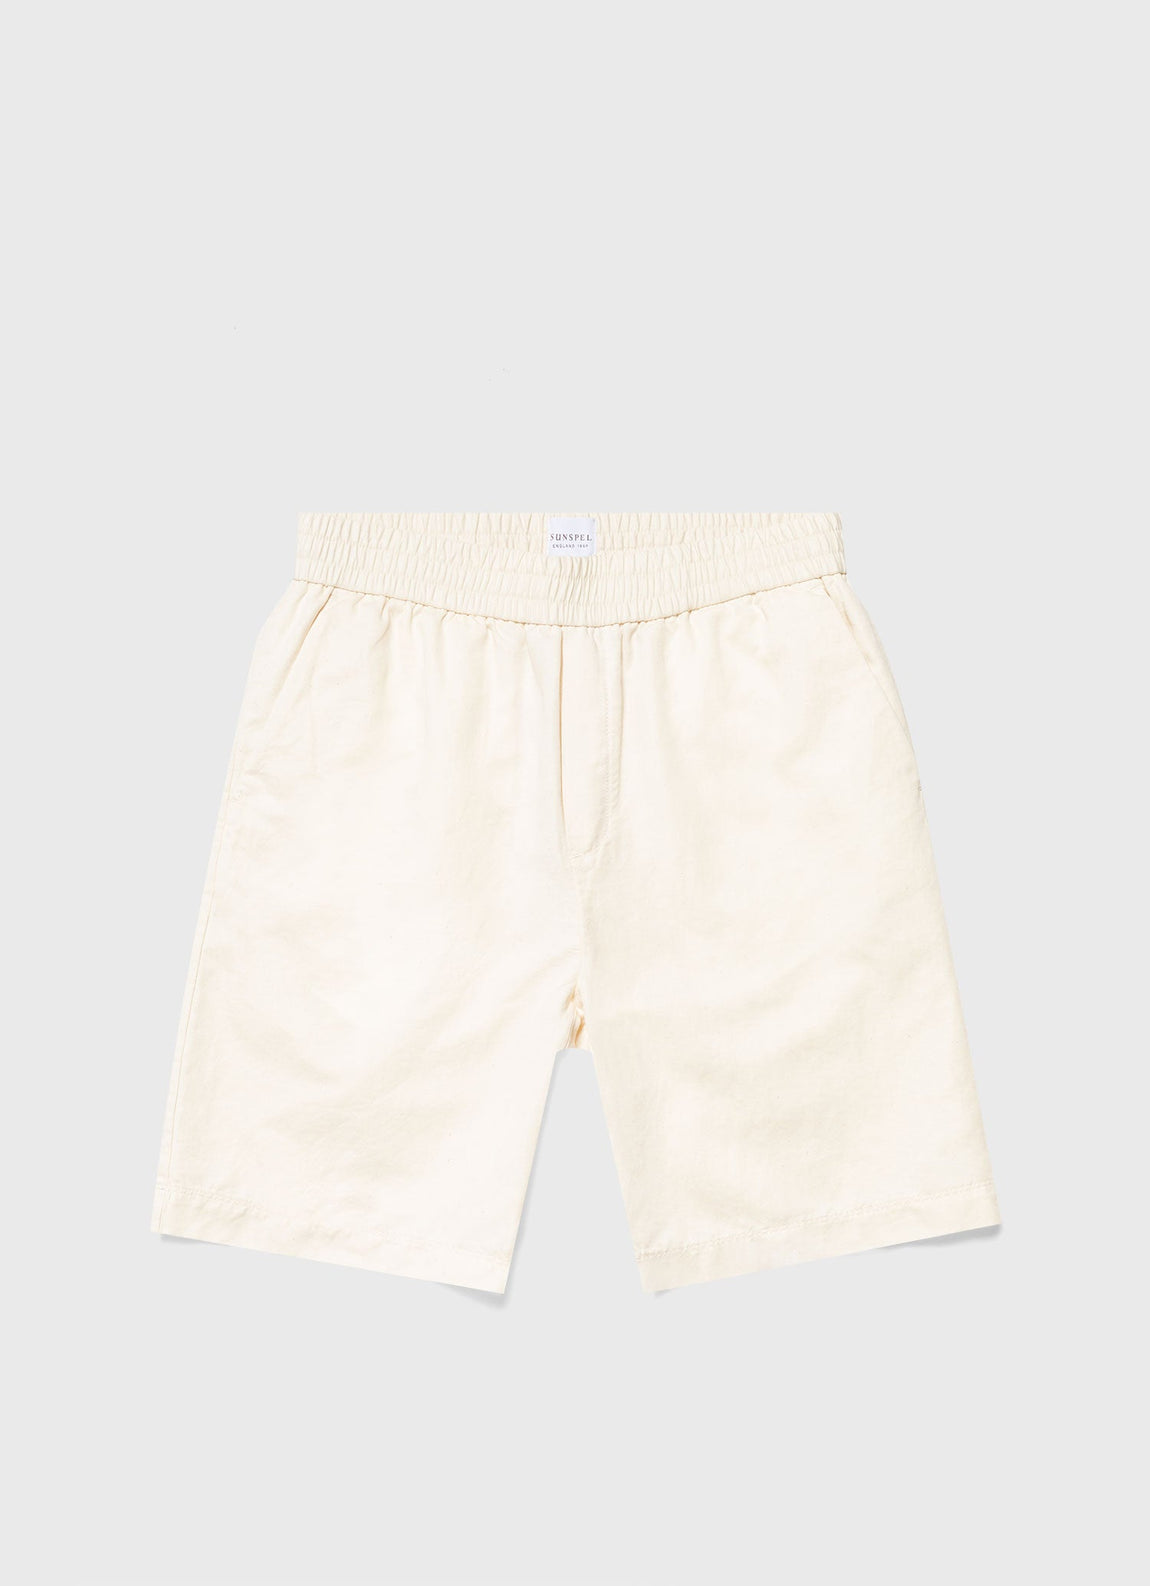 Men's Cotton Linen Drawstring Shorts in Undyed